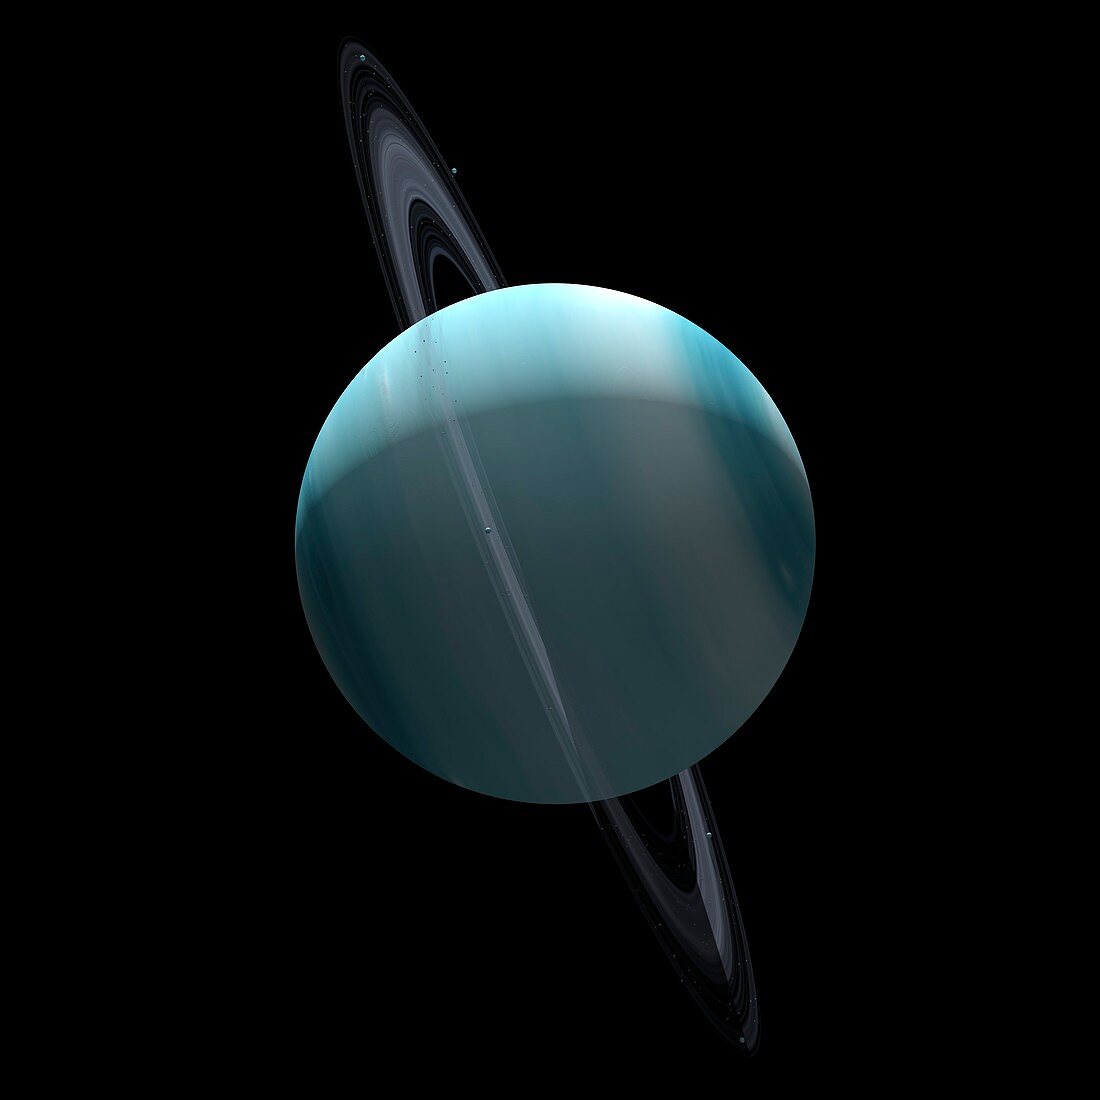 Uranus and its rings,illustration